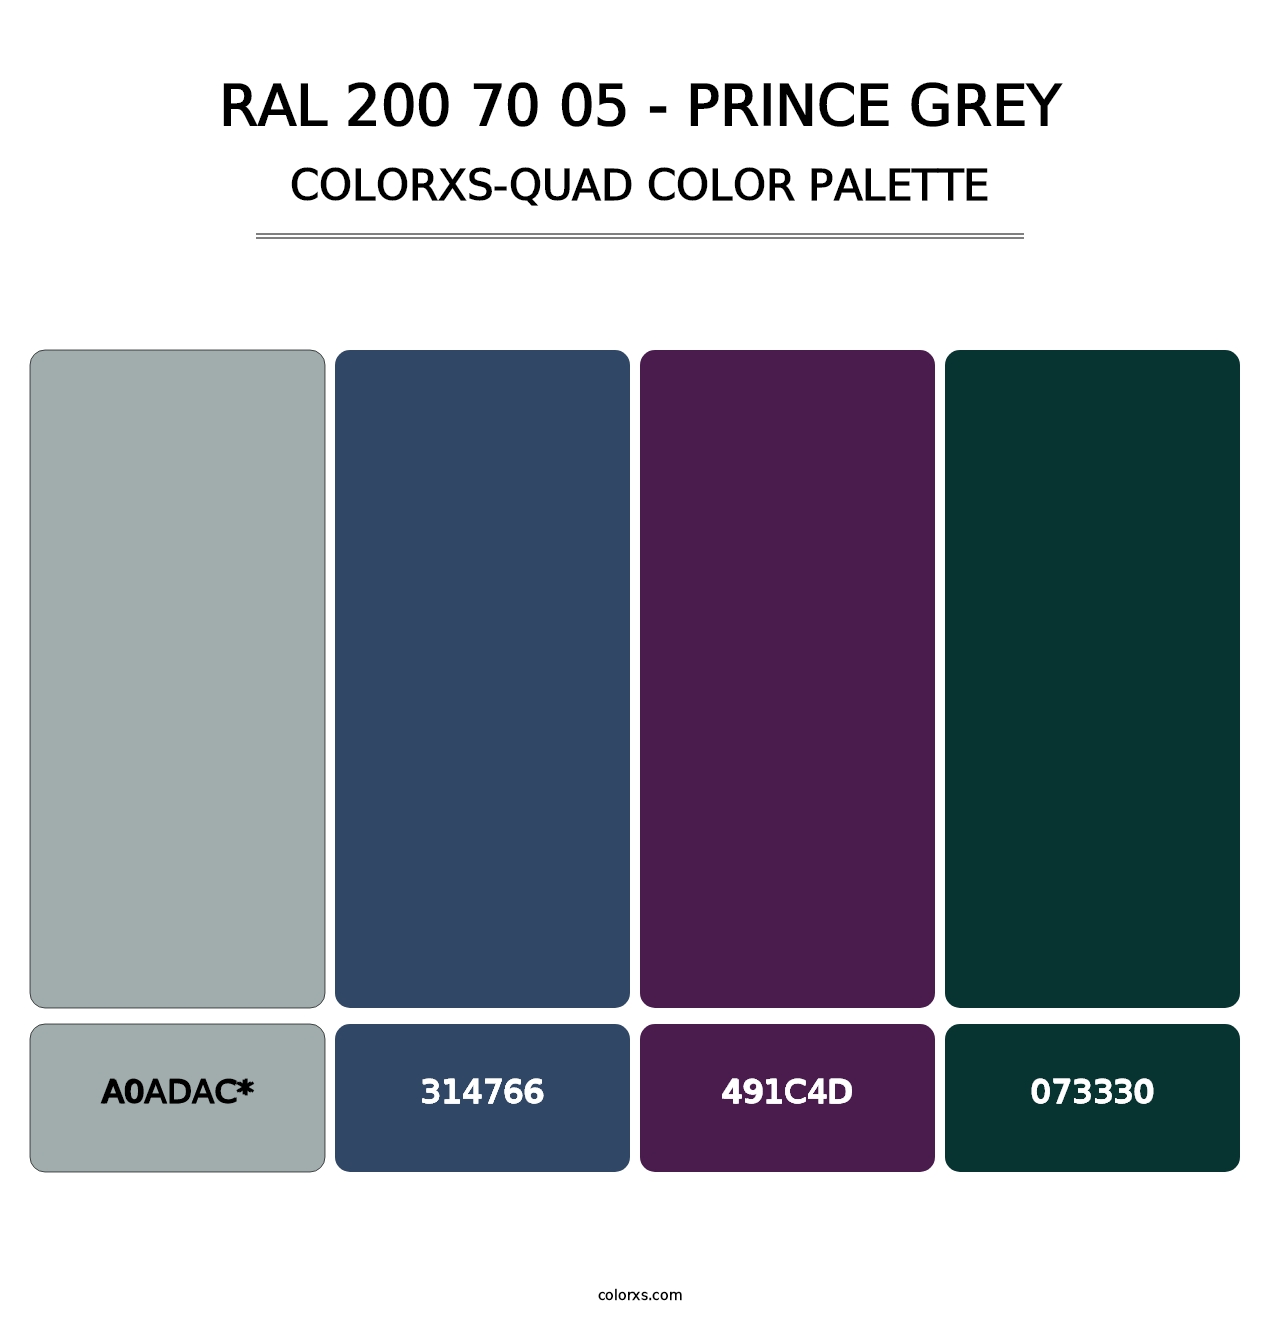 RAL 200 70 05 - Prince Grey - Colorxs Quad Palette